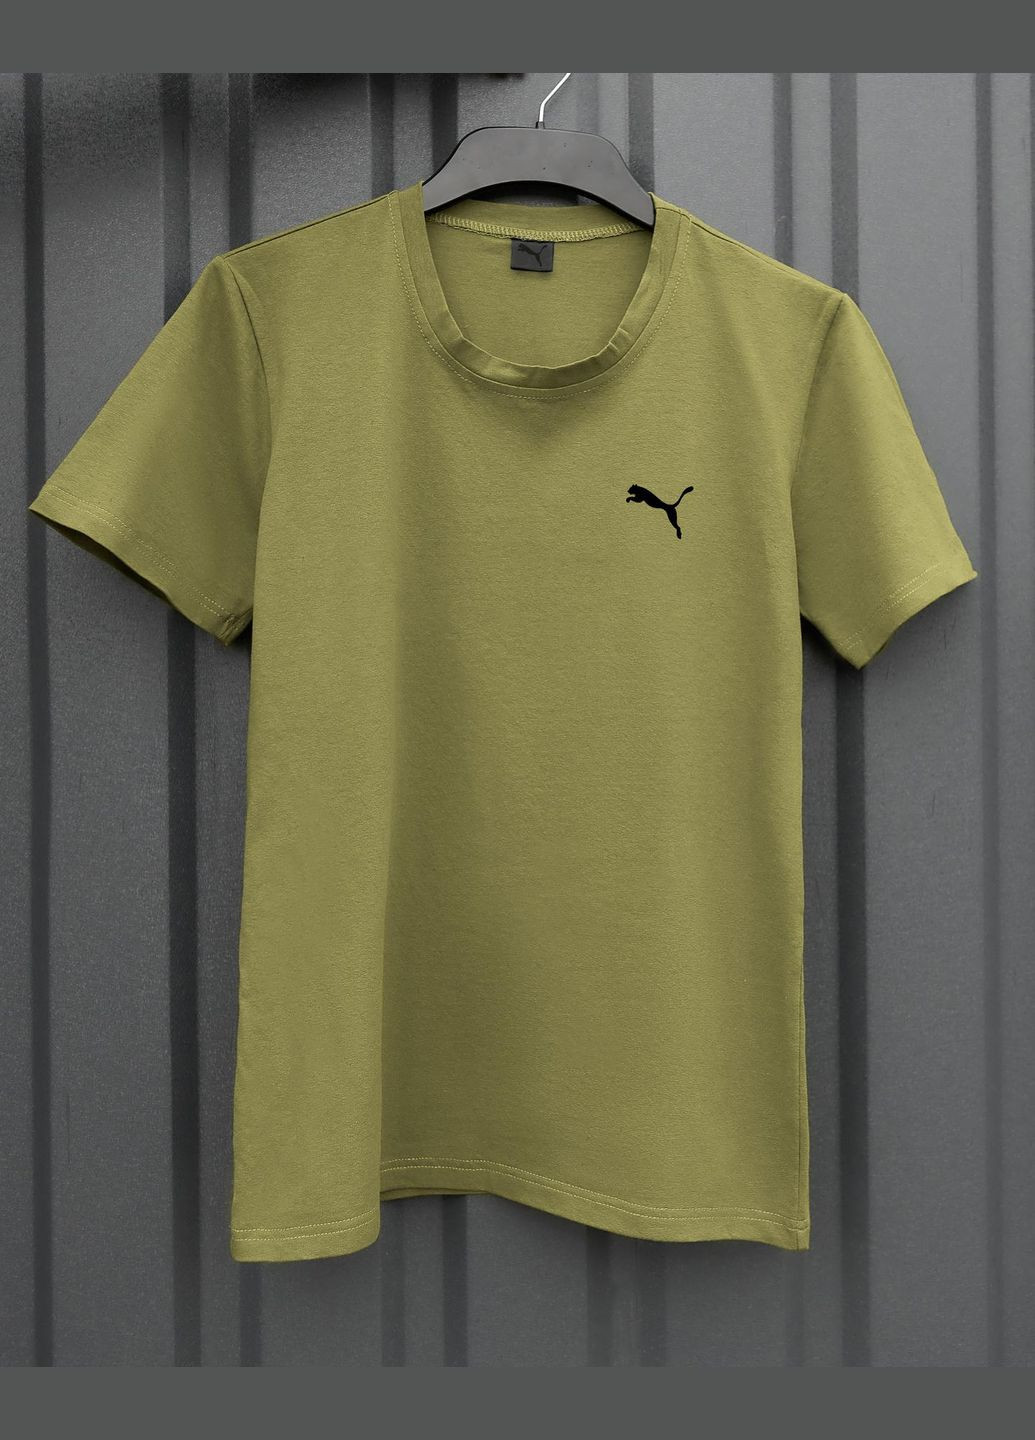 Хаки (оливковая) базовая футболка No Brand